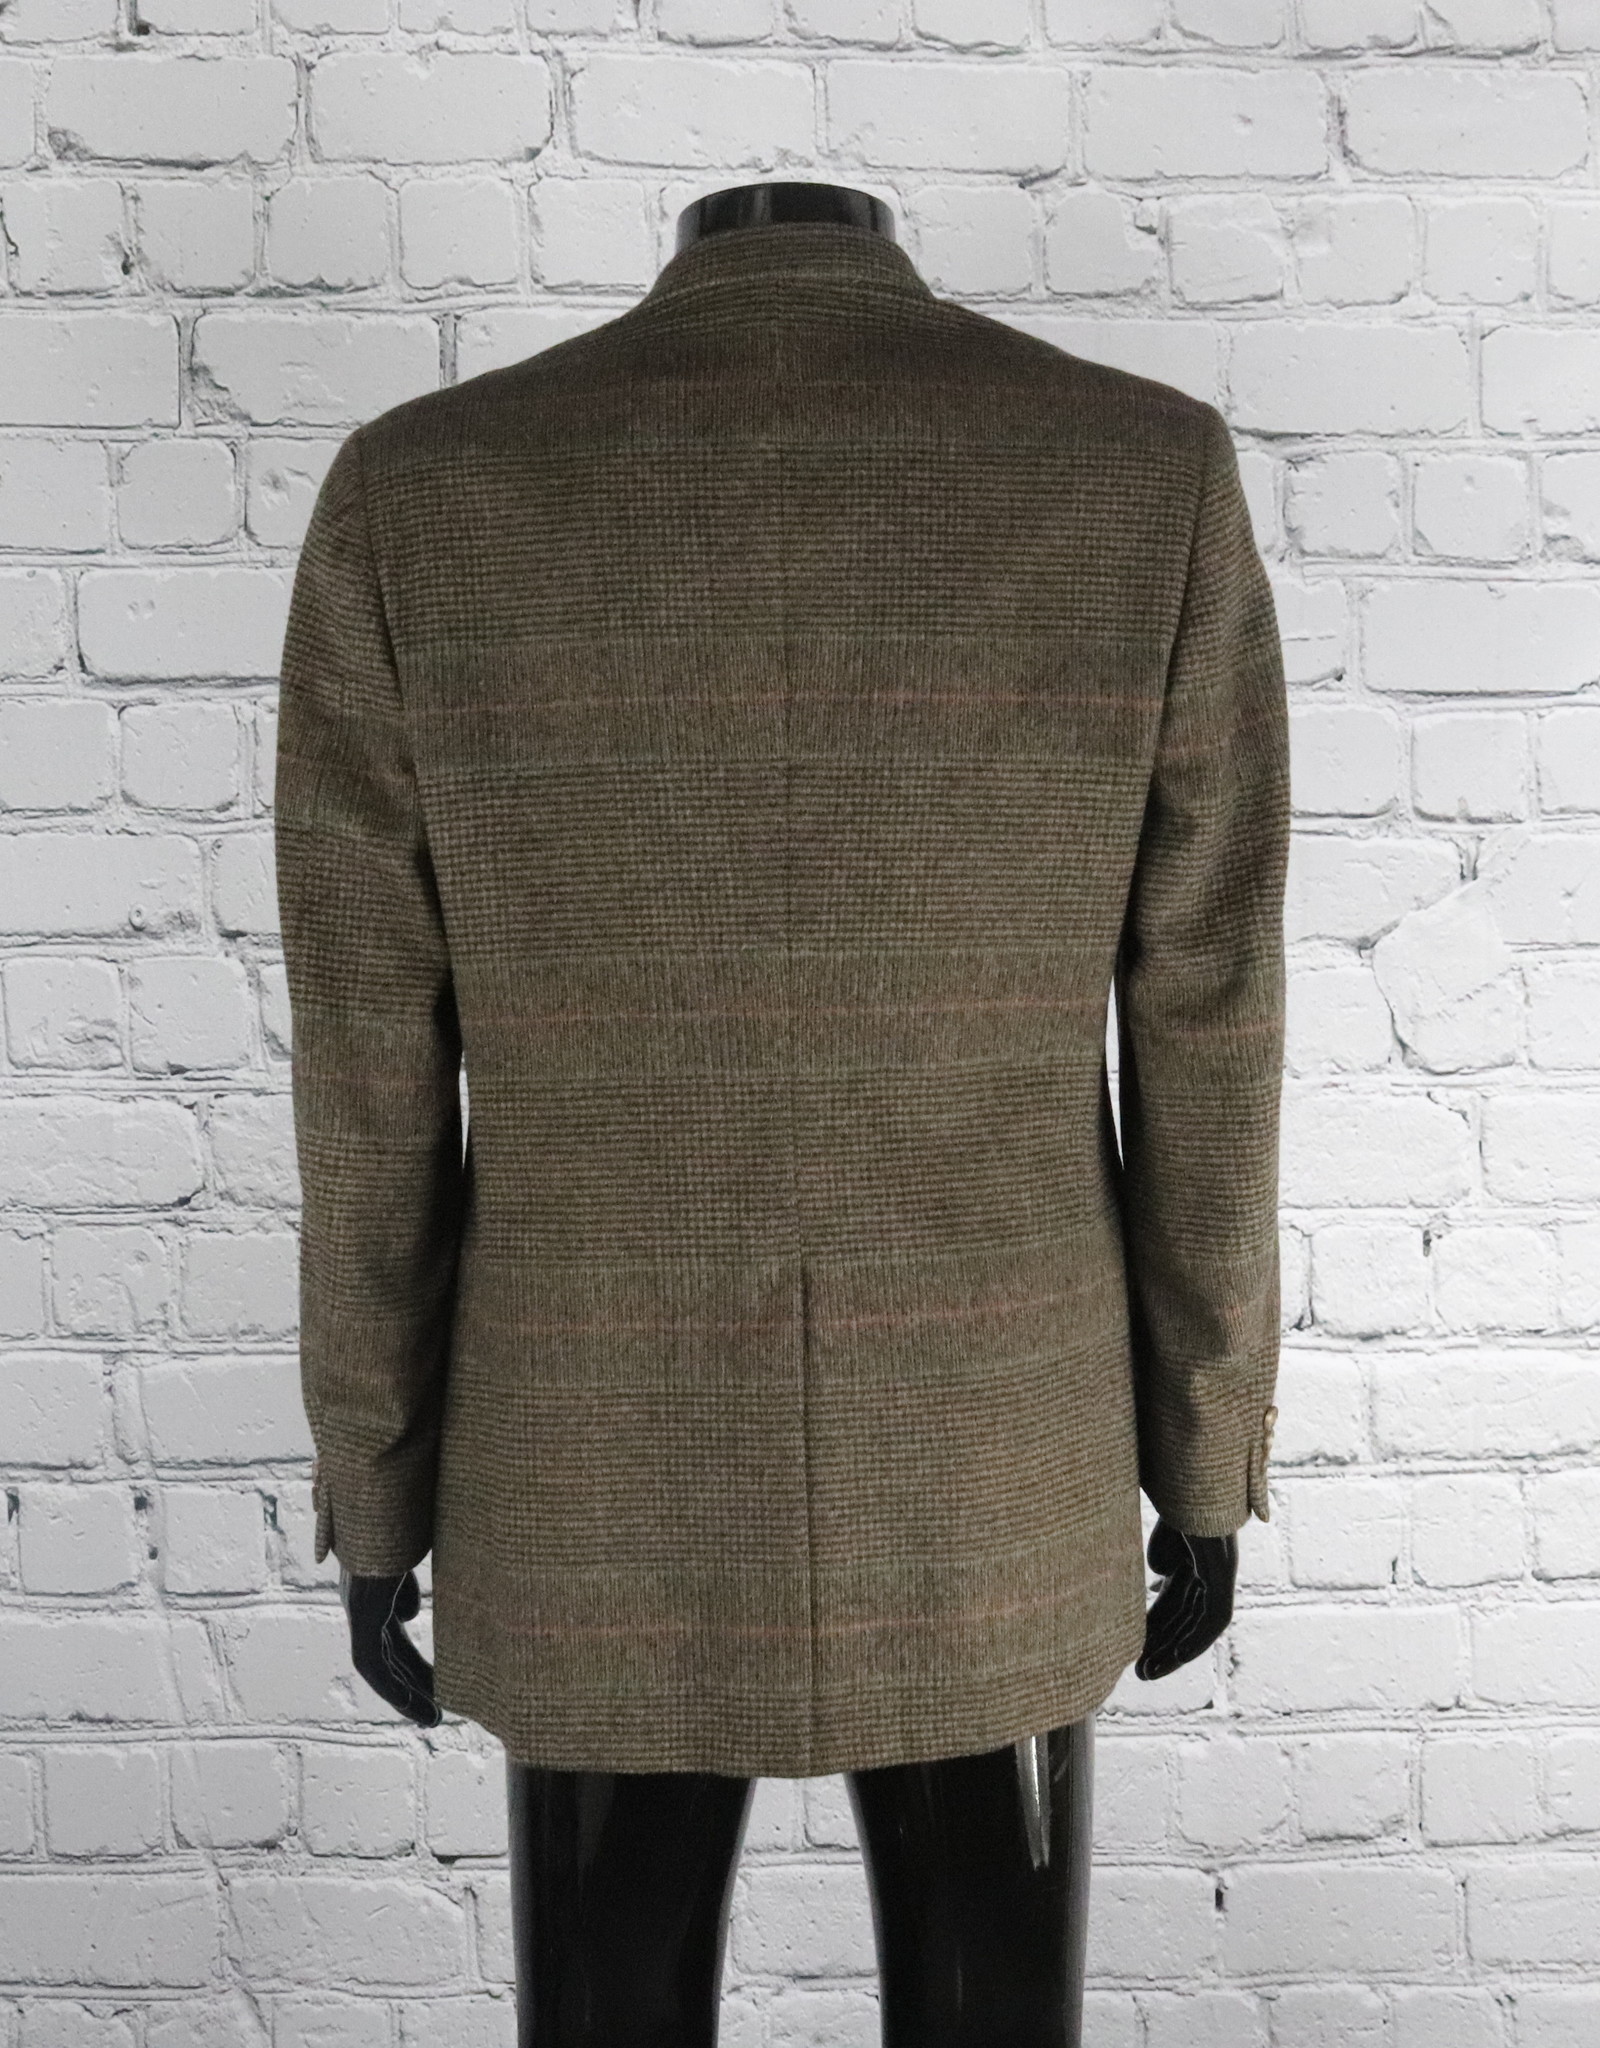 JoS. A. Banks: Vintage Brown and Grey Plaid Blazer for Guys